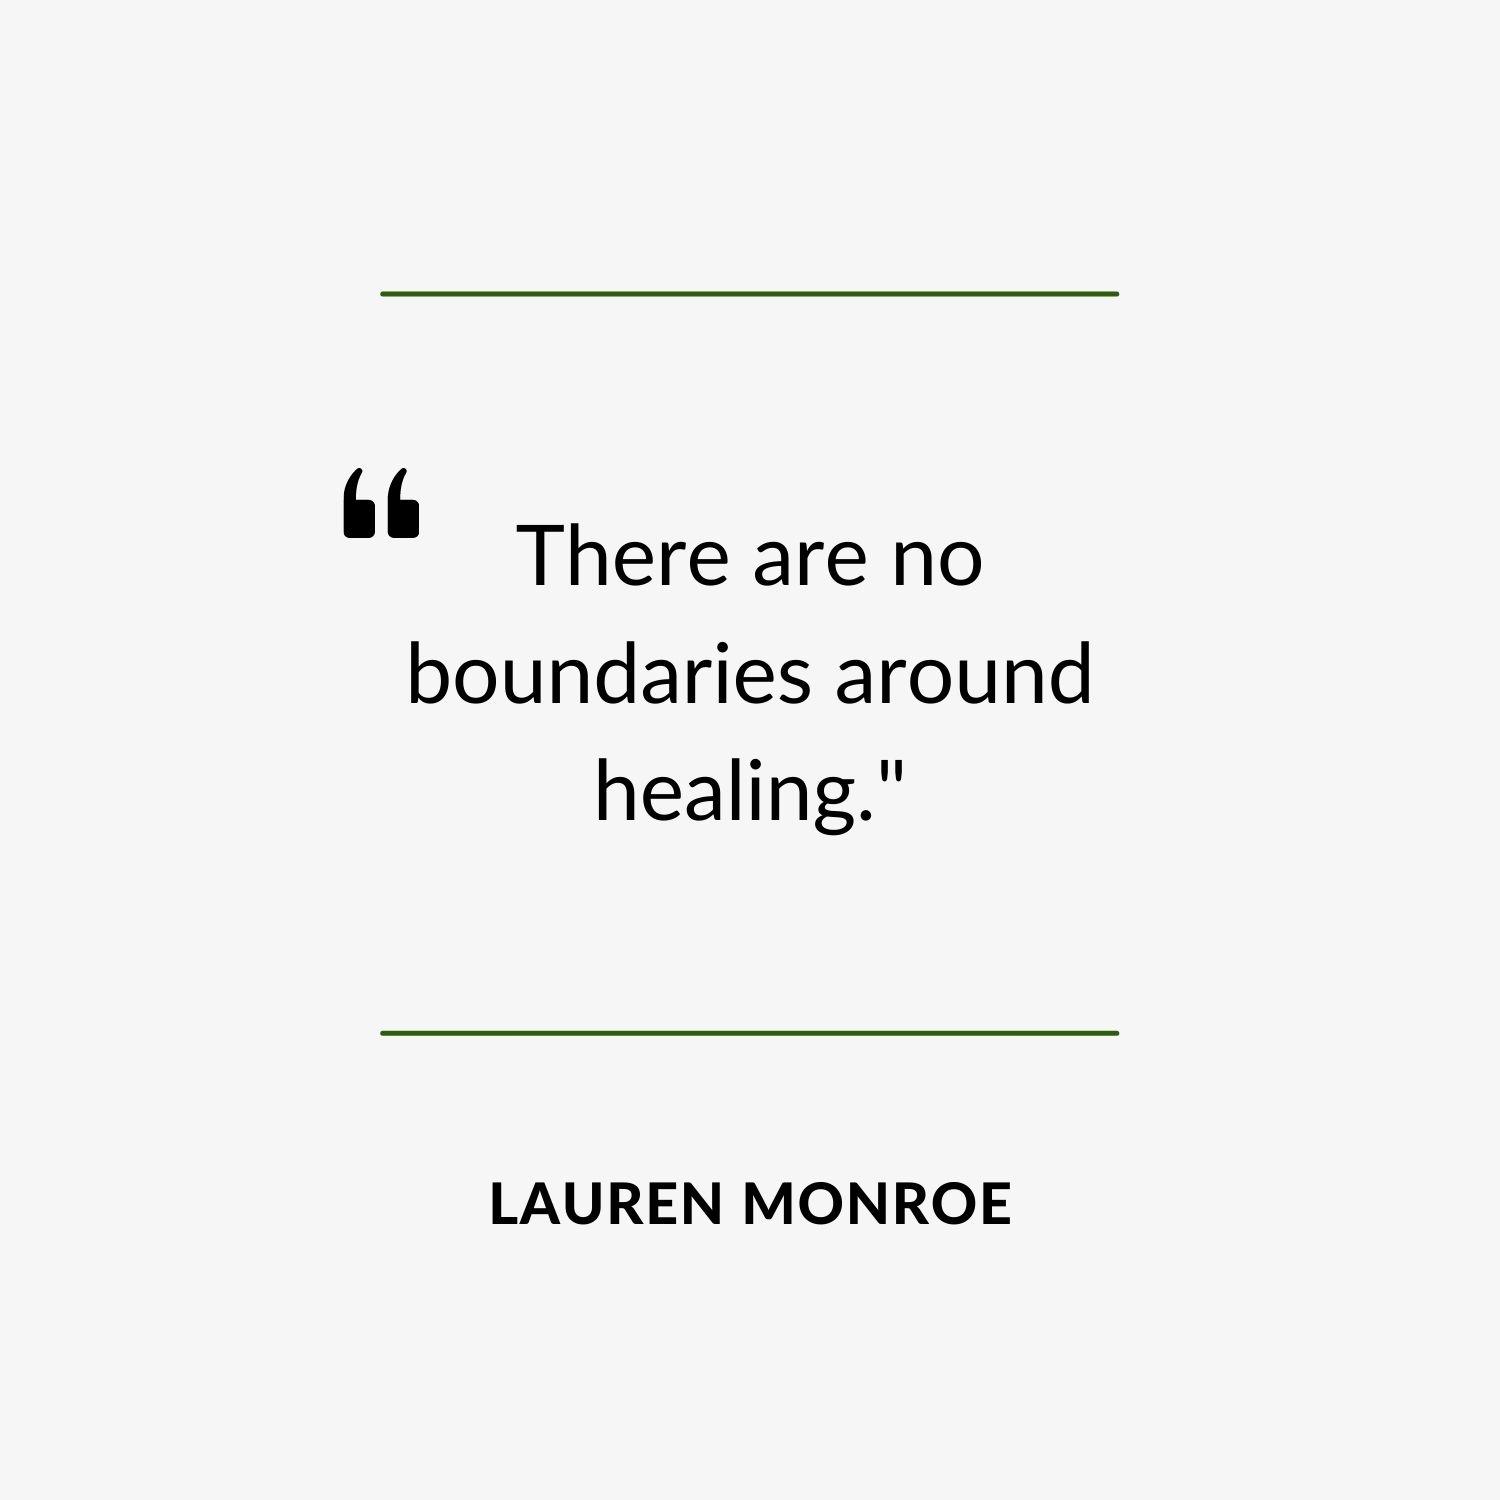 Quote - "There are no boundaries around healing."